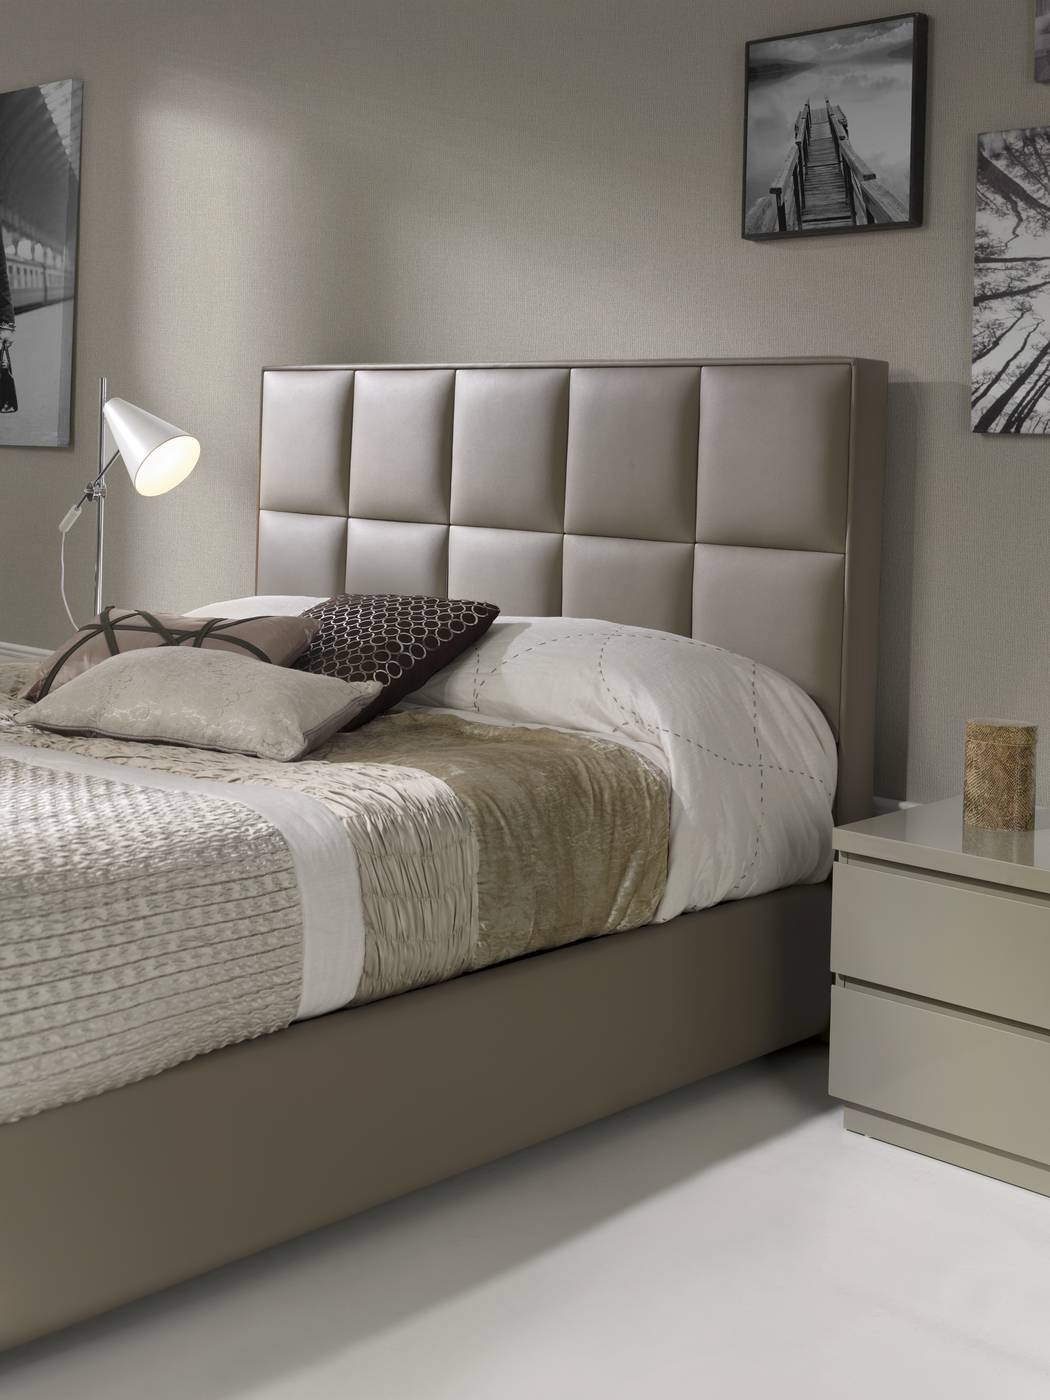 Cama Abatible LD Noa - Cama con canapé abatible tapizada en polipiel, tela o terciopelo, para cama de 150 cm, disponible en varios colores.